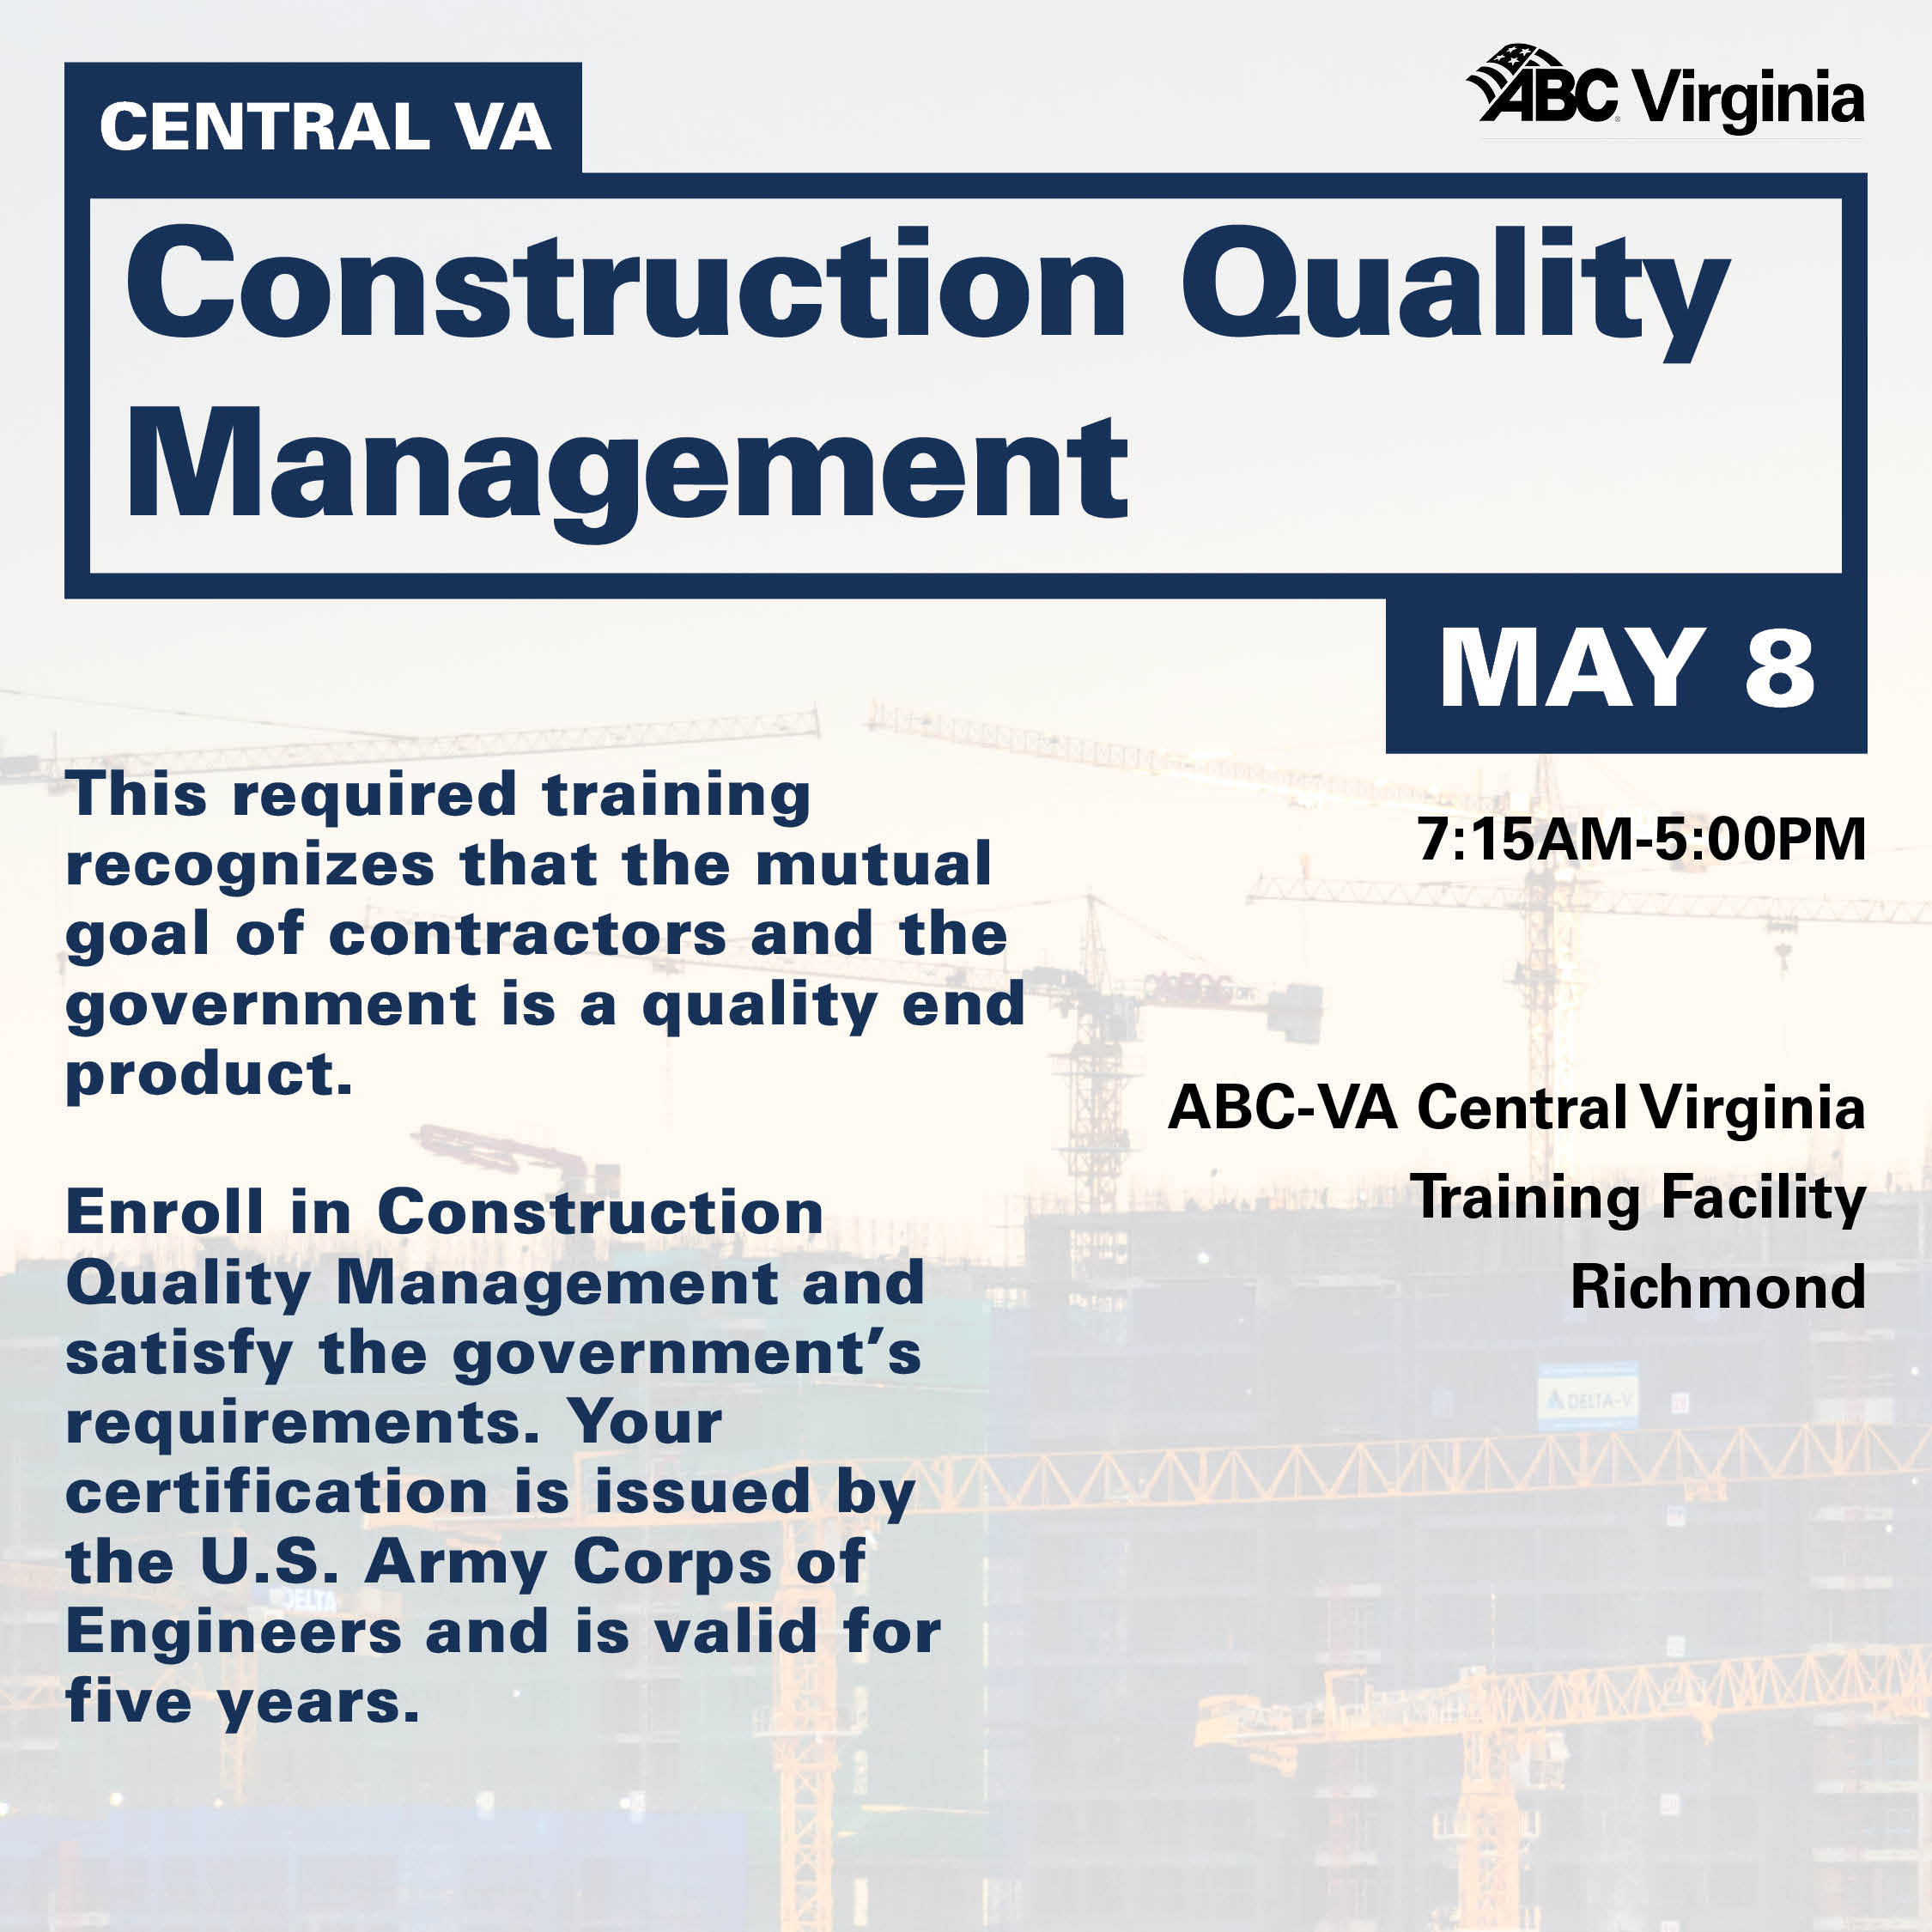 CV Construction Quality Management May 8 WEB